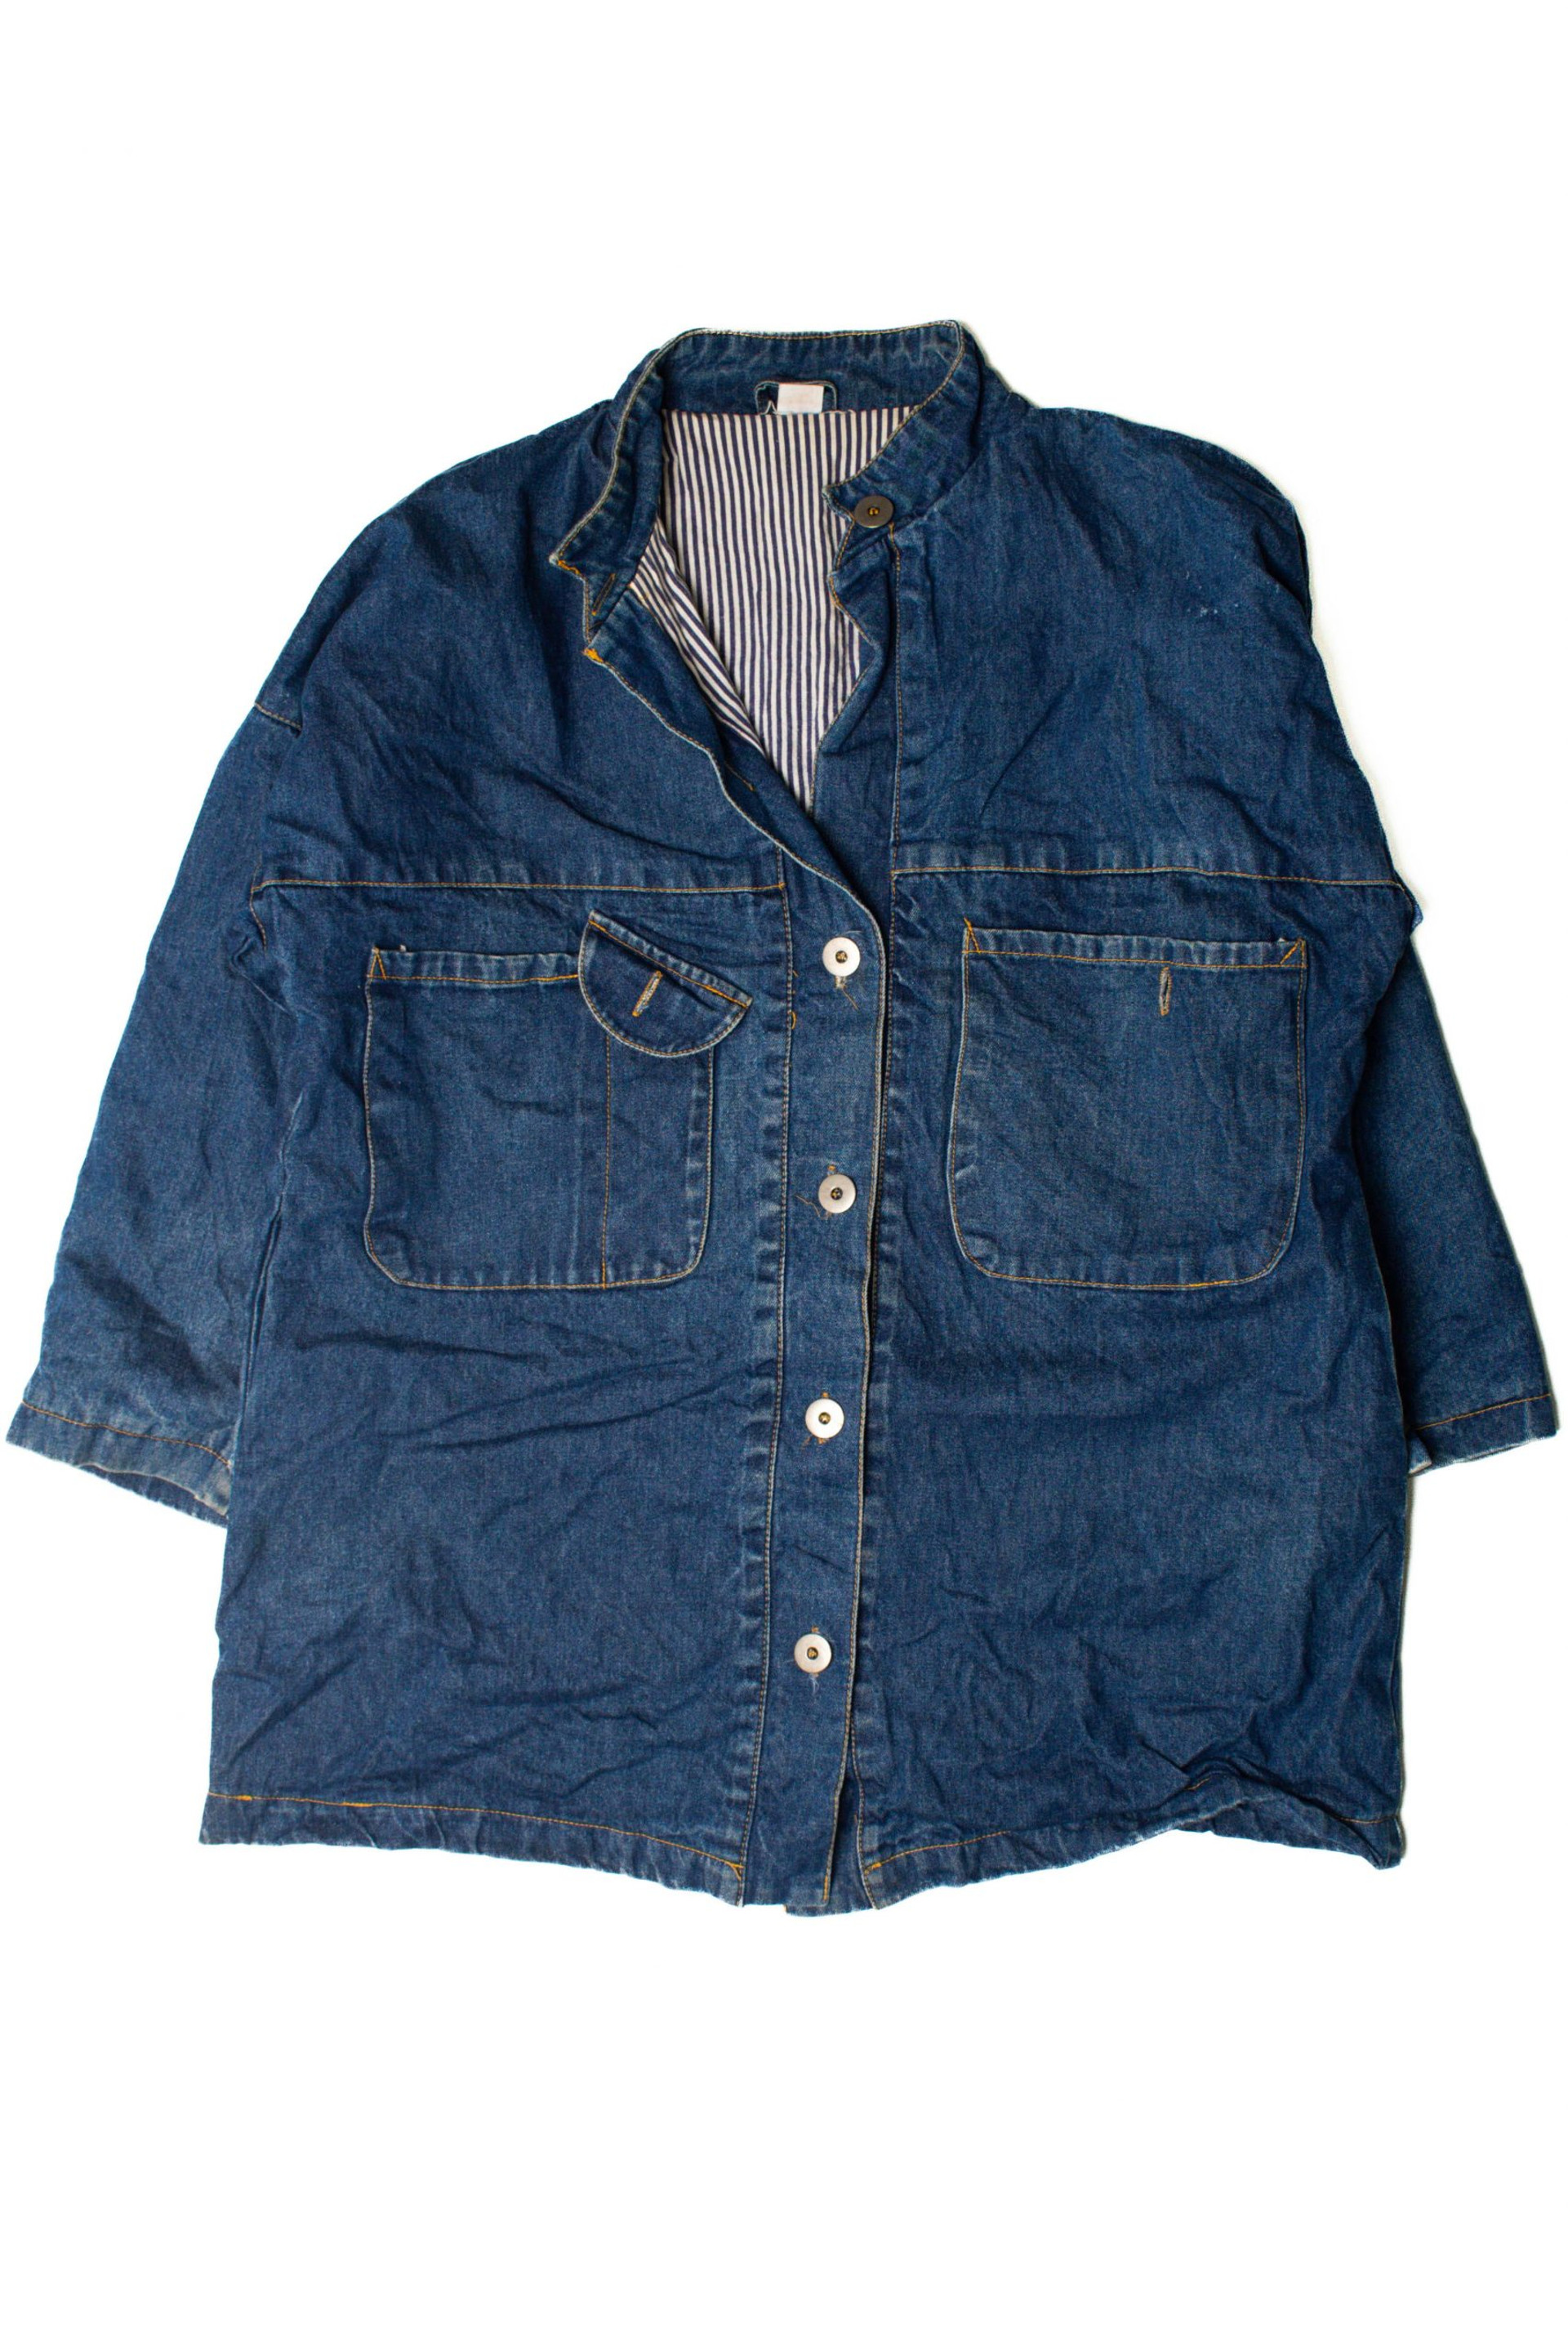 Recycled + Vintage Clothing - Vintage Denim Jackets - Page 1 - Ragstock.com